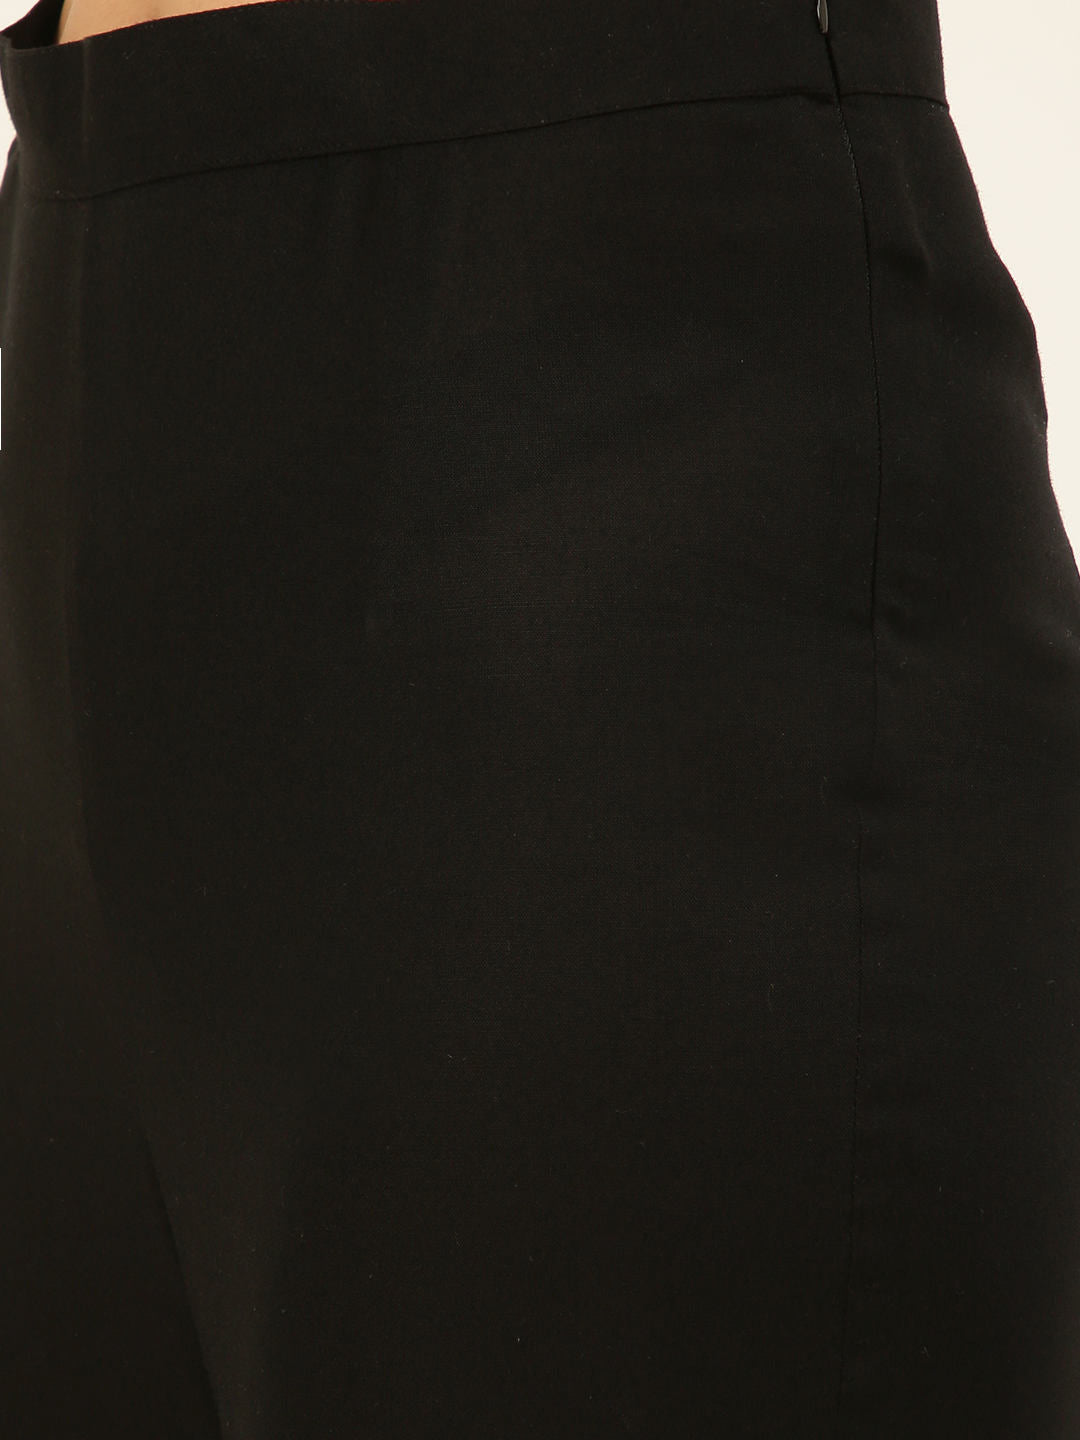 Premium Black V-Neck Peplum Style Top & Trouser Rayon Co-ord Set